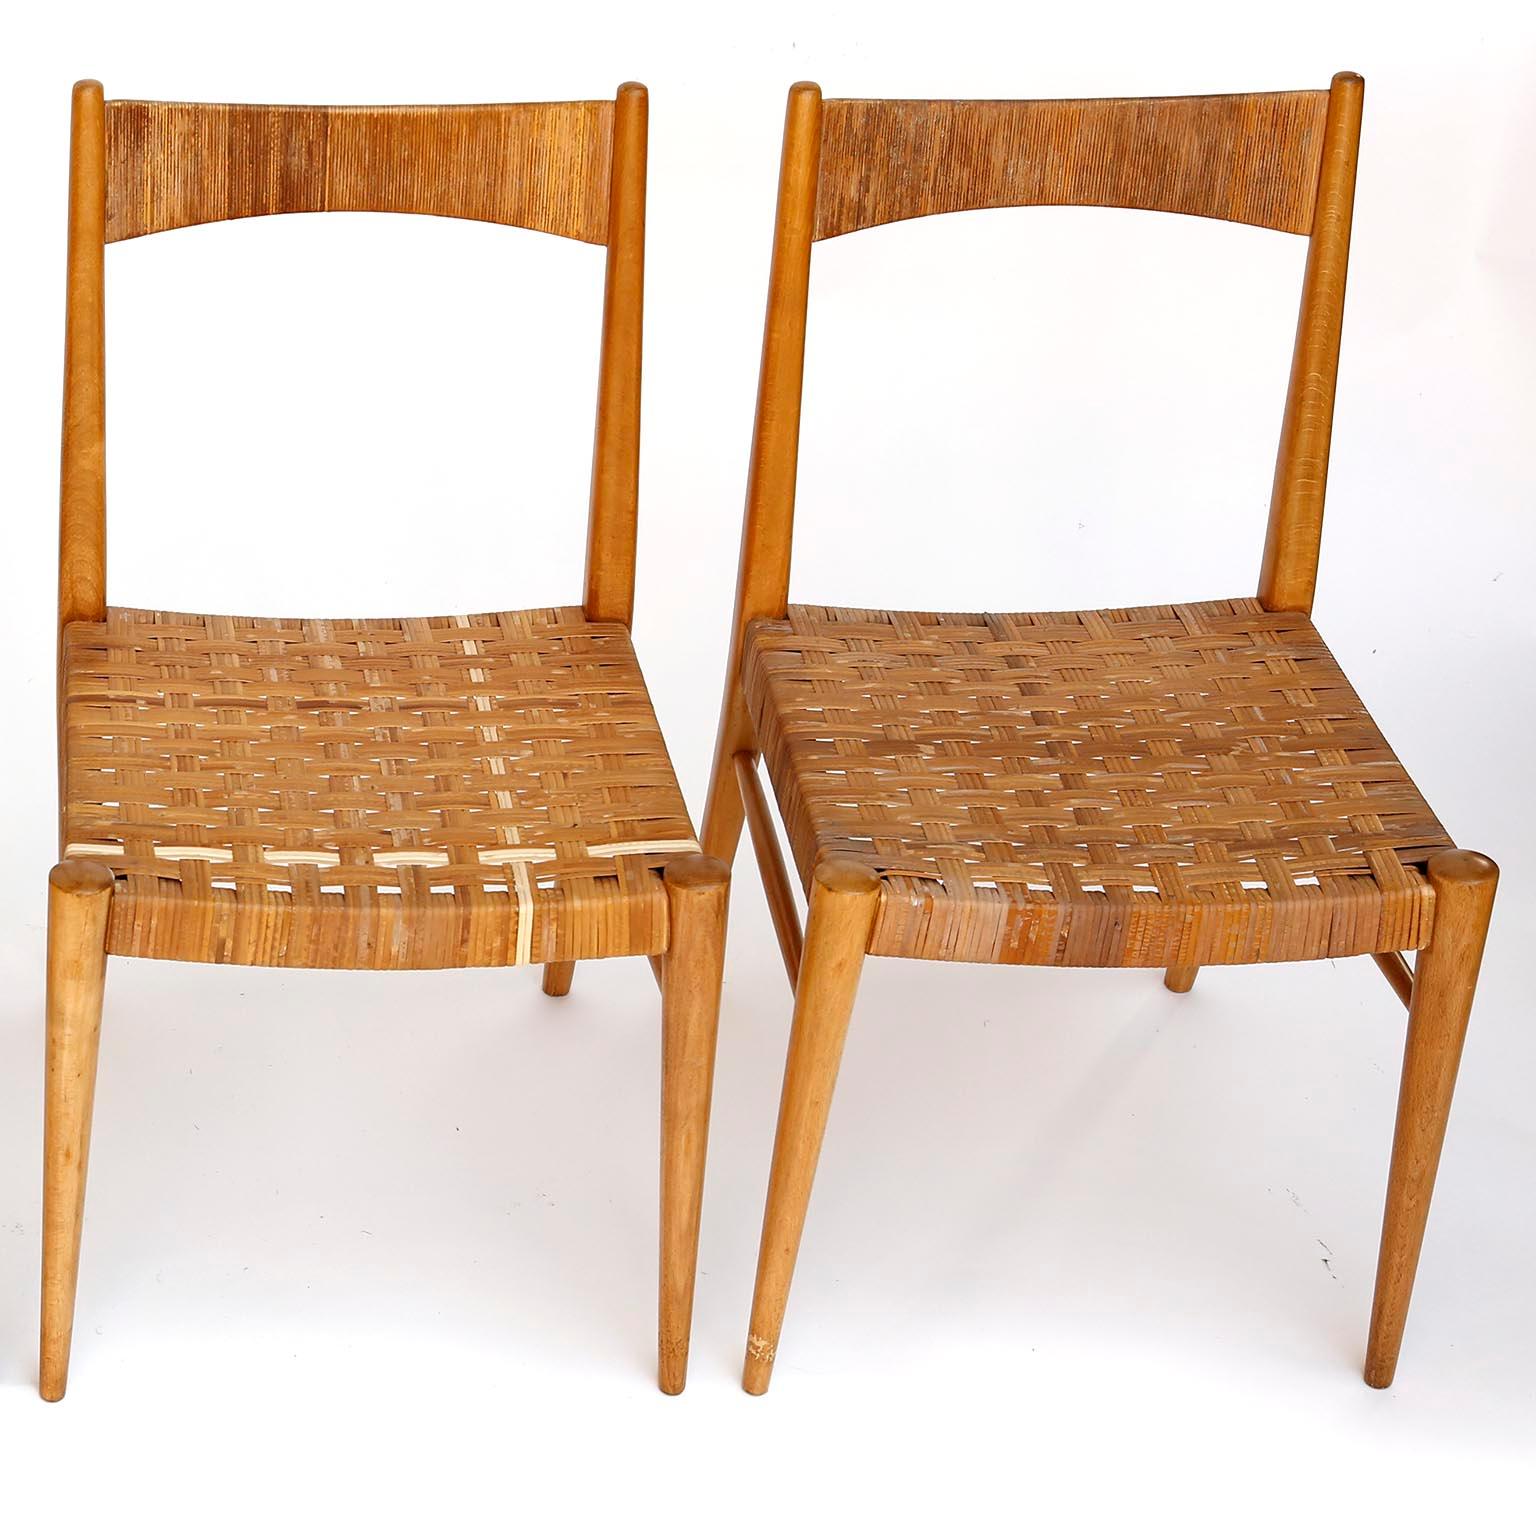 Four Anna-Lülja Praun Chairs, Wood Wicker Cane, 1950s For Sale 9